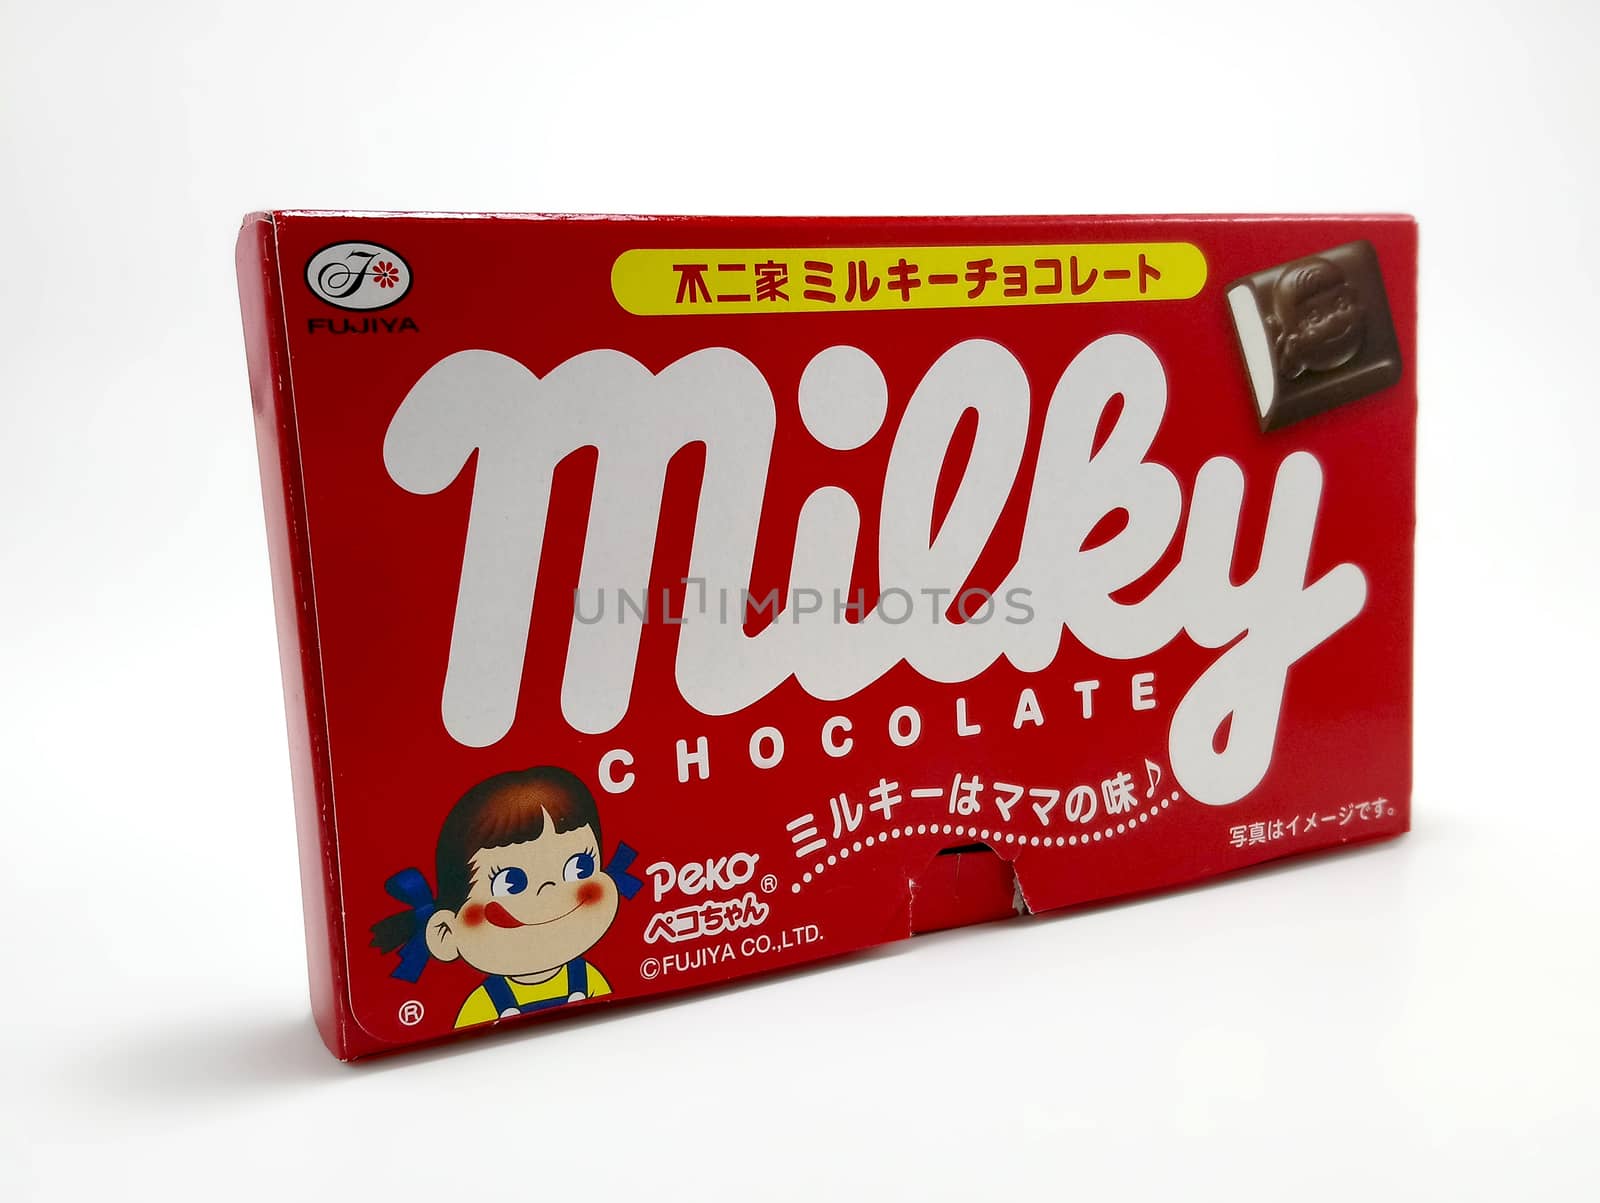 Fujiya milky chocolate in Manila, Philippines by imwaltersy